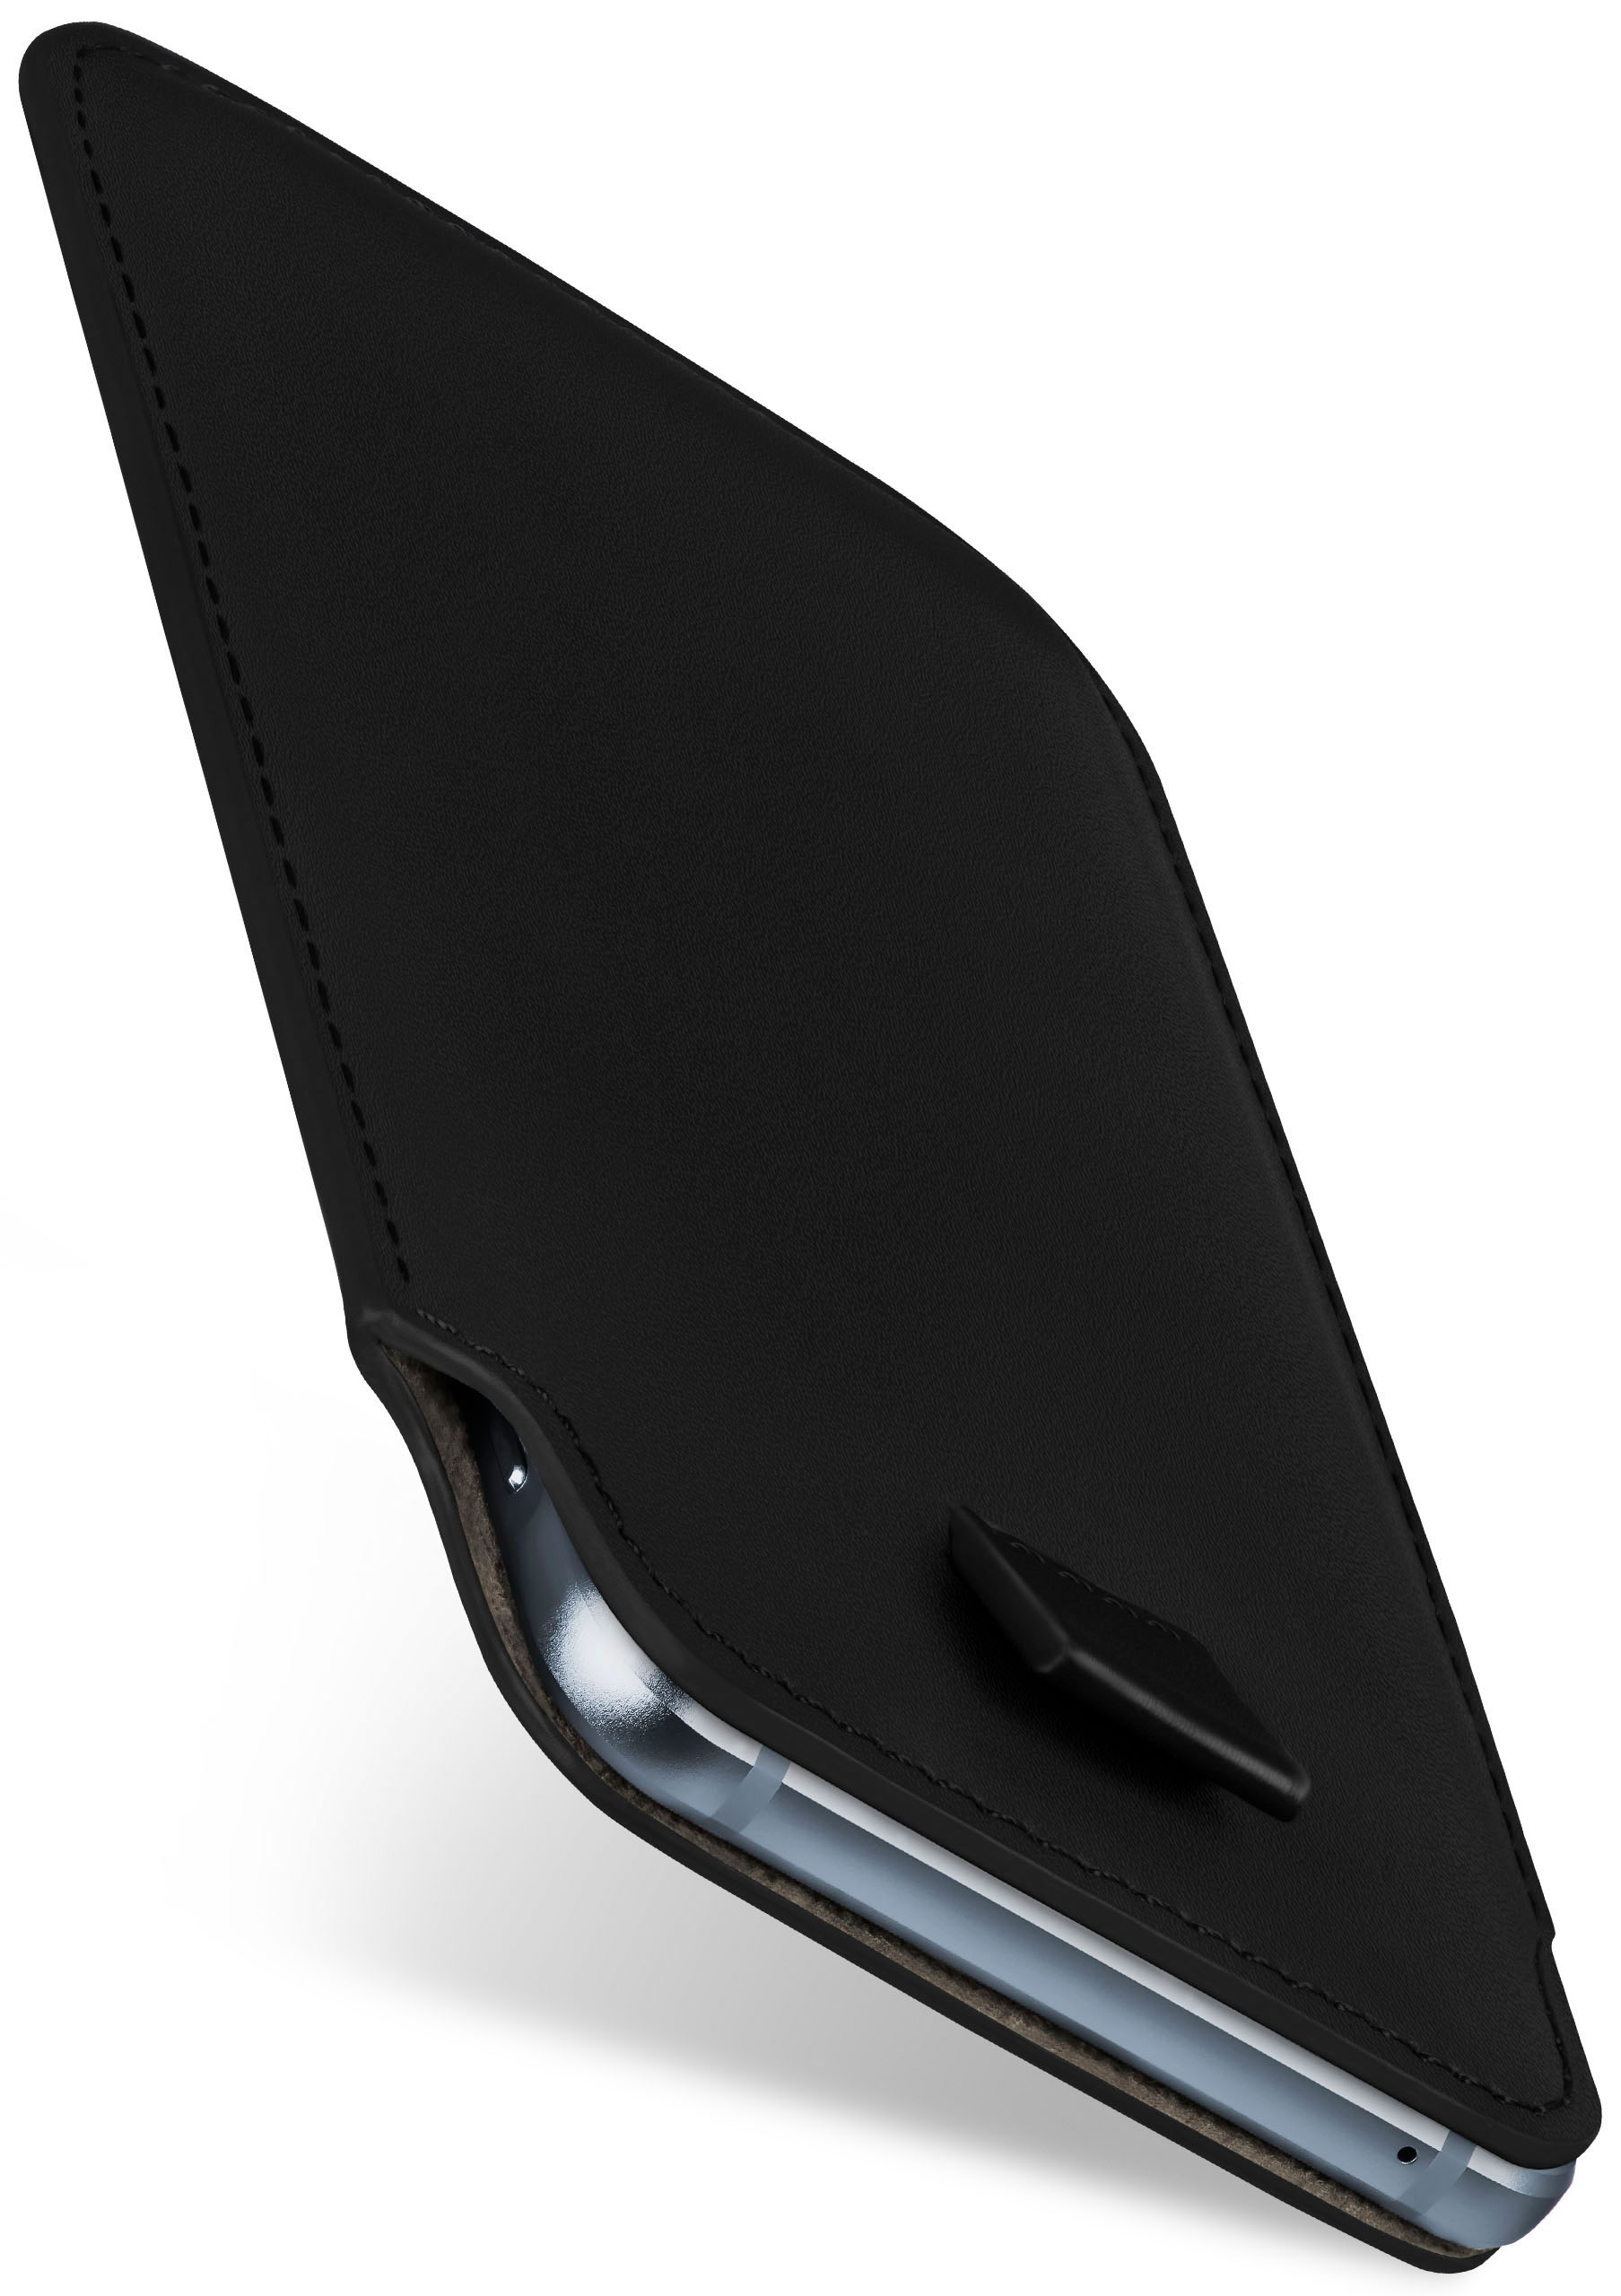 MOEX Slide Plus, Full Deep-Black Cover, Q7 Case, LG